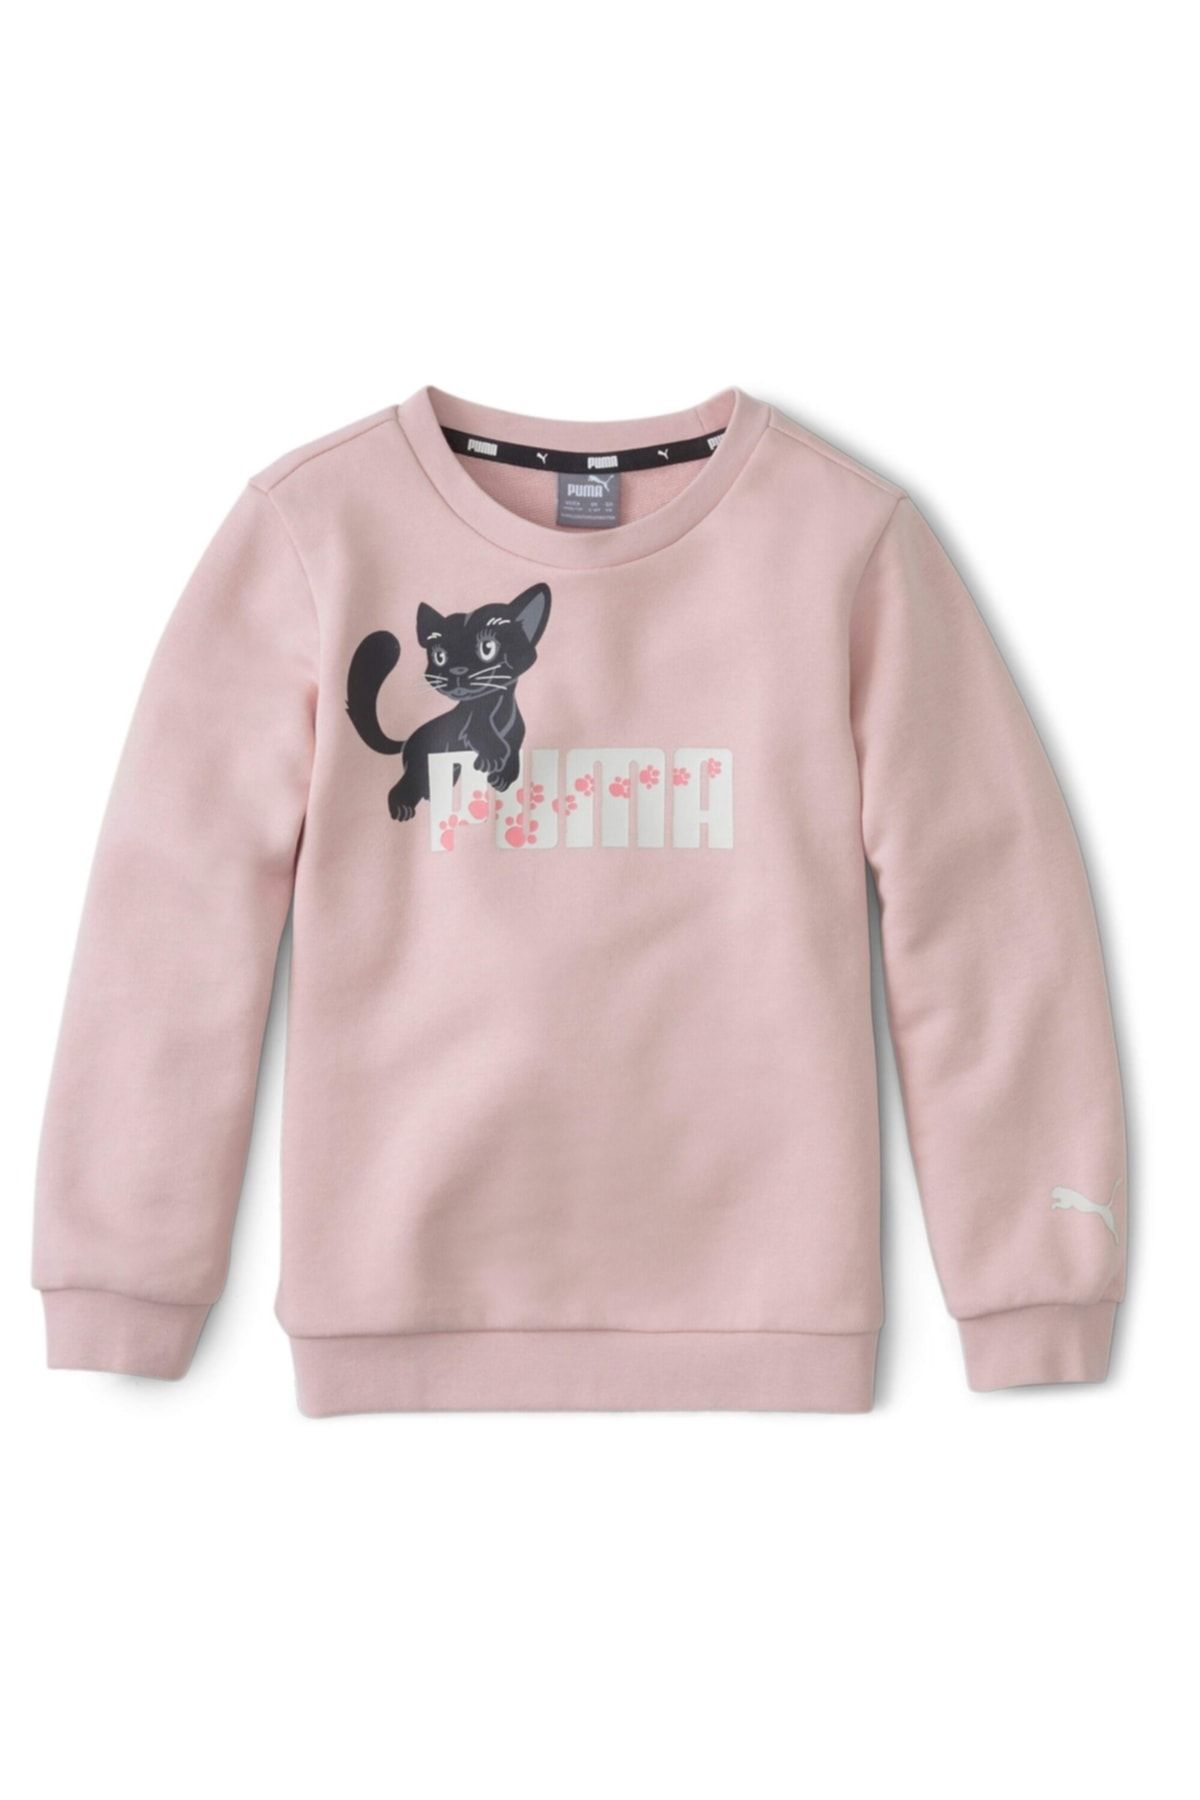 Puma Unisex Spor Sweatshirt - ANIMALS - 58334915